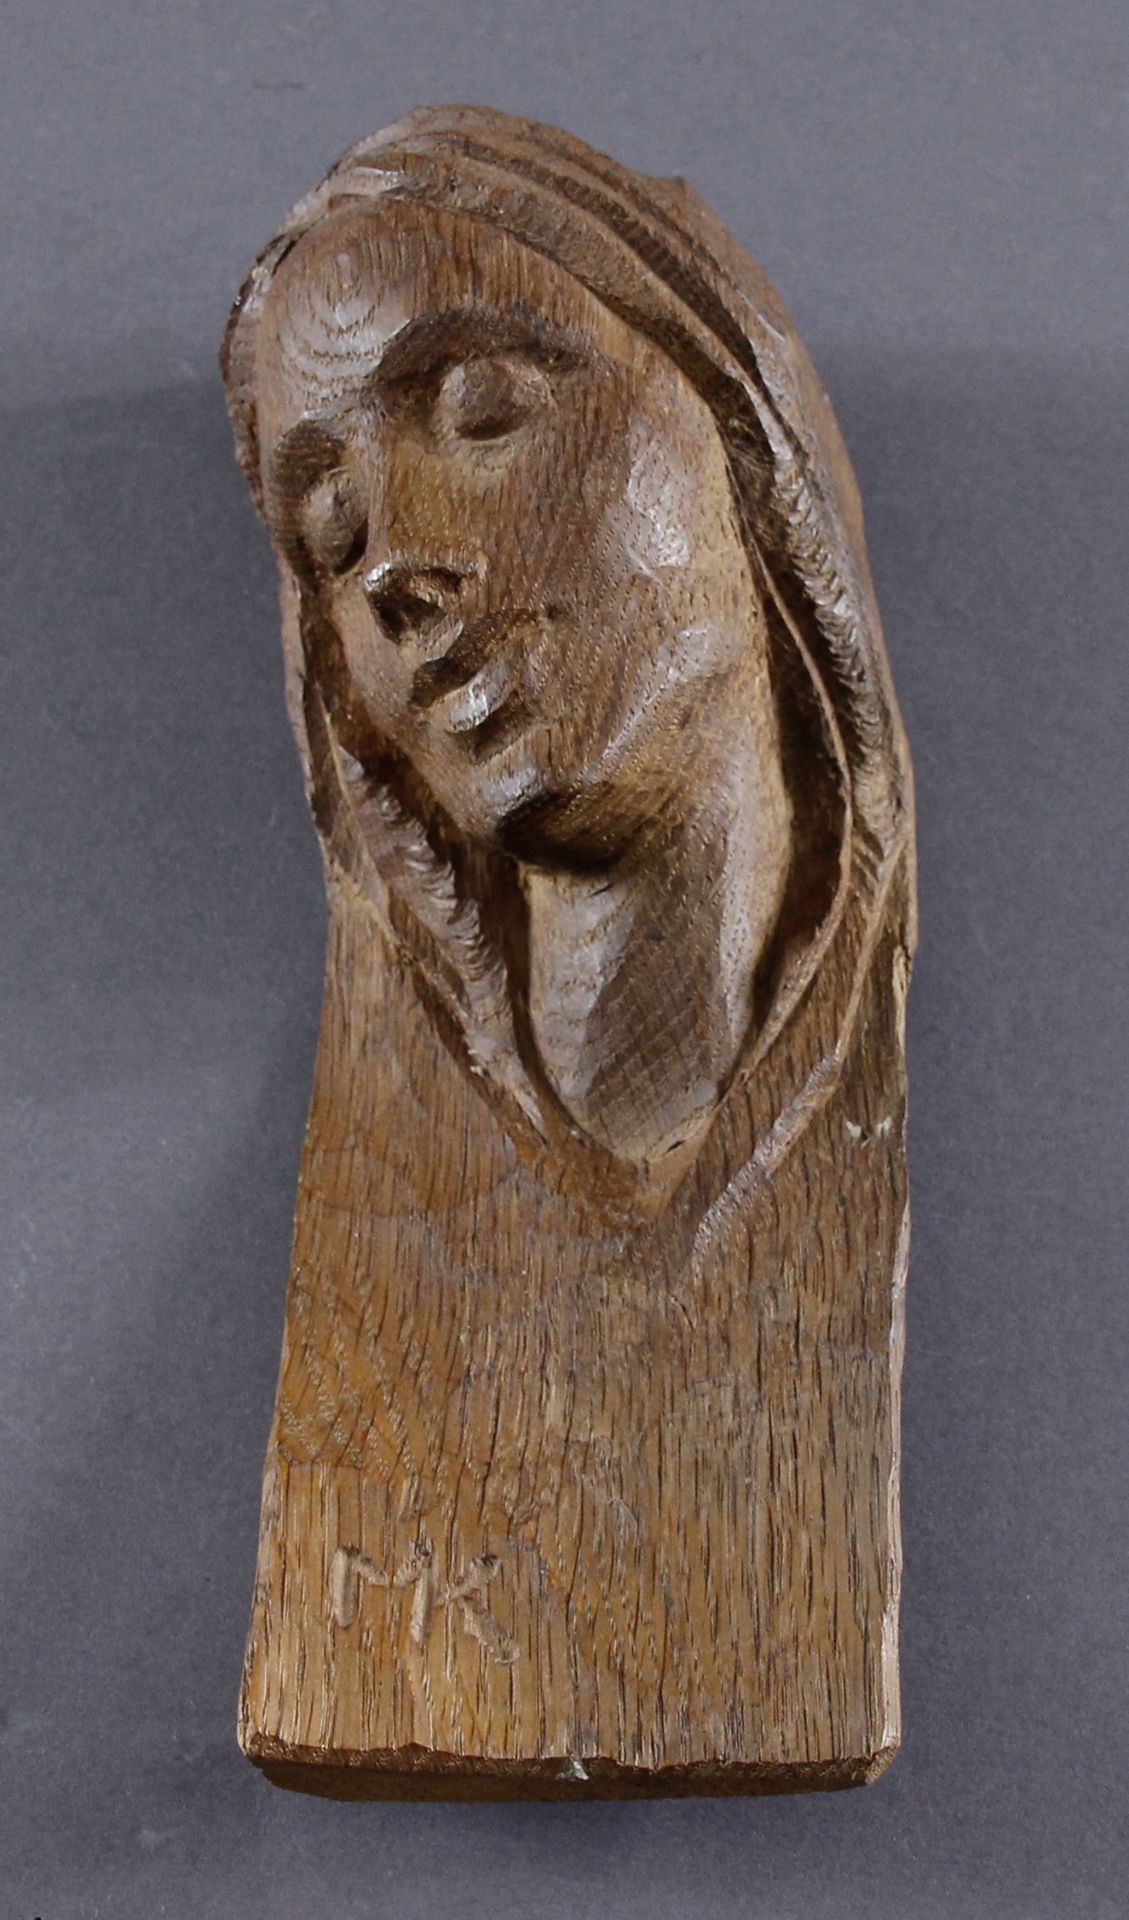 Robert Michael Komorowski (1905 - 1970), Holz Skulptur, "Madonna" monogrammiert "MK", originaler